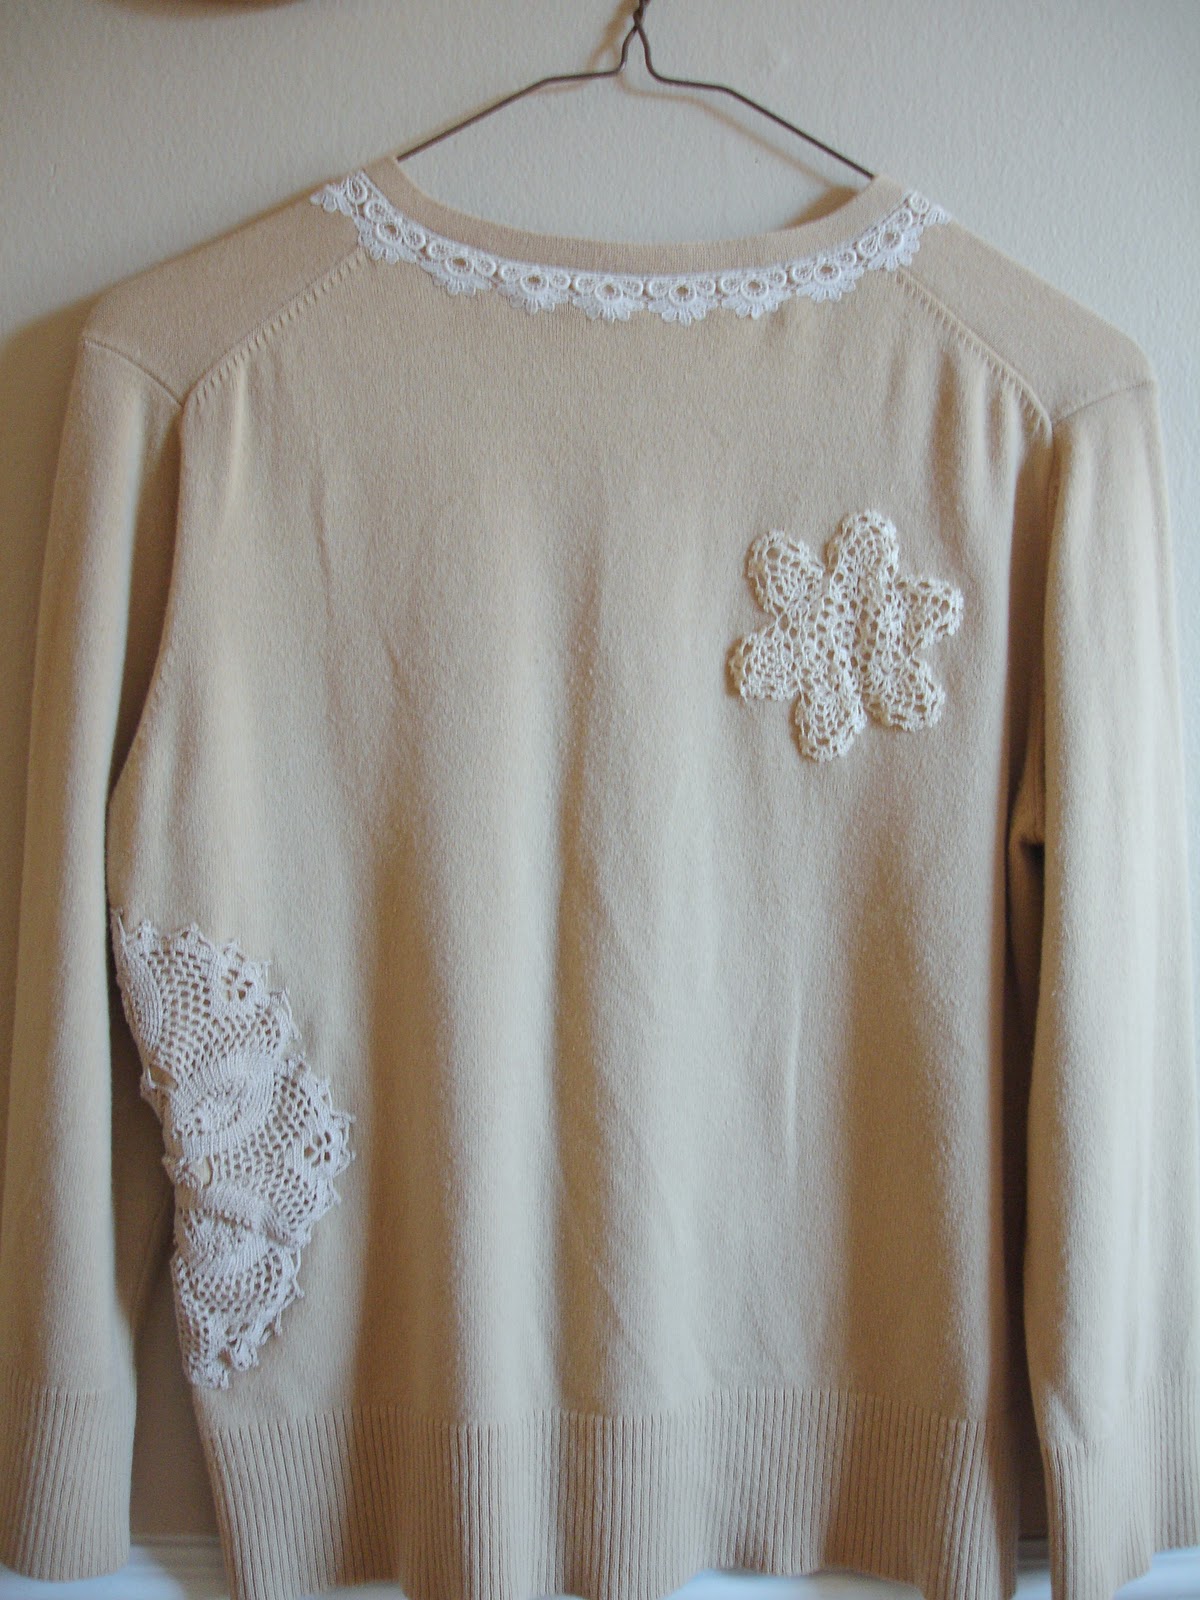 field wonderful: Doily Sweater